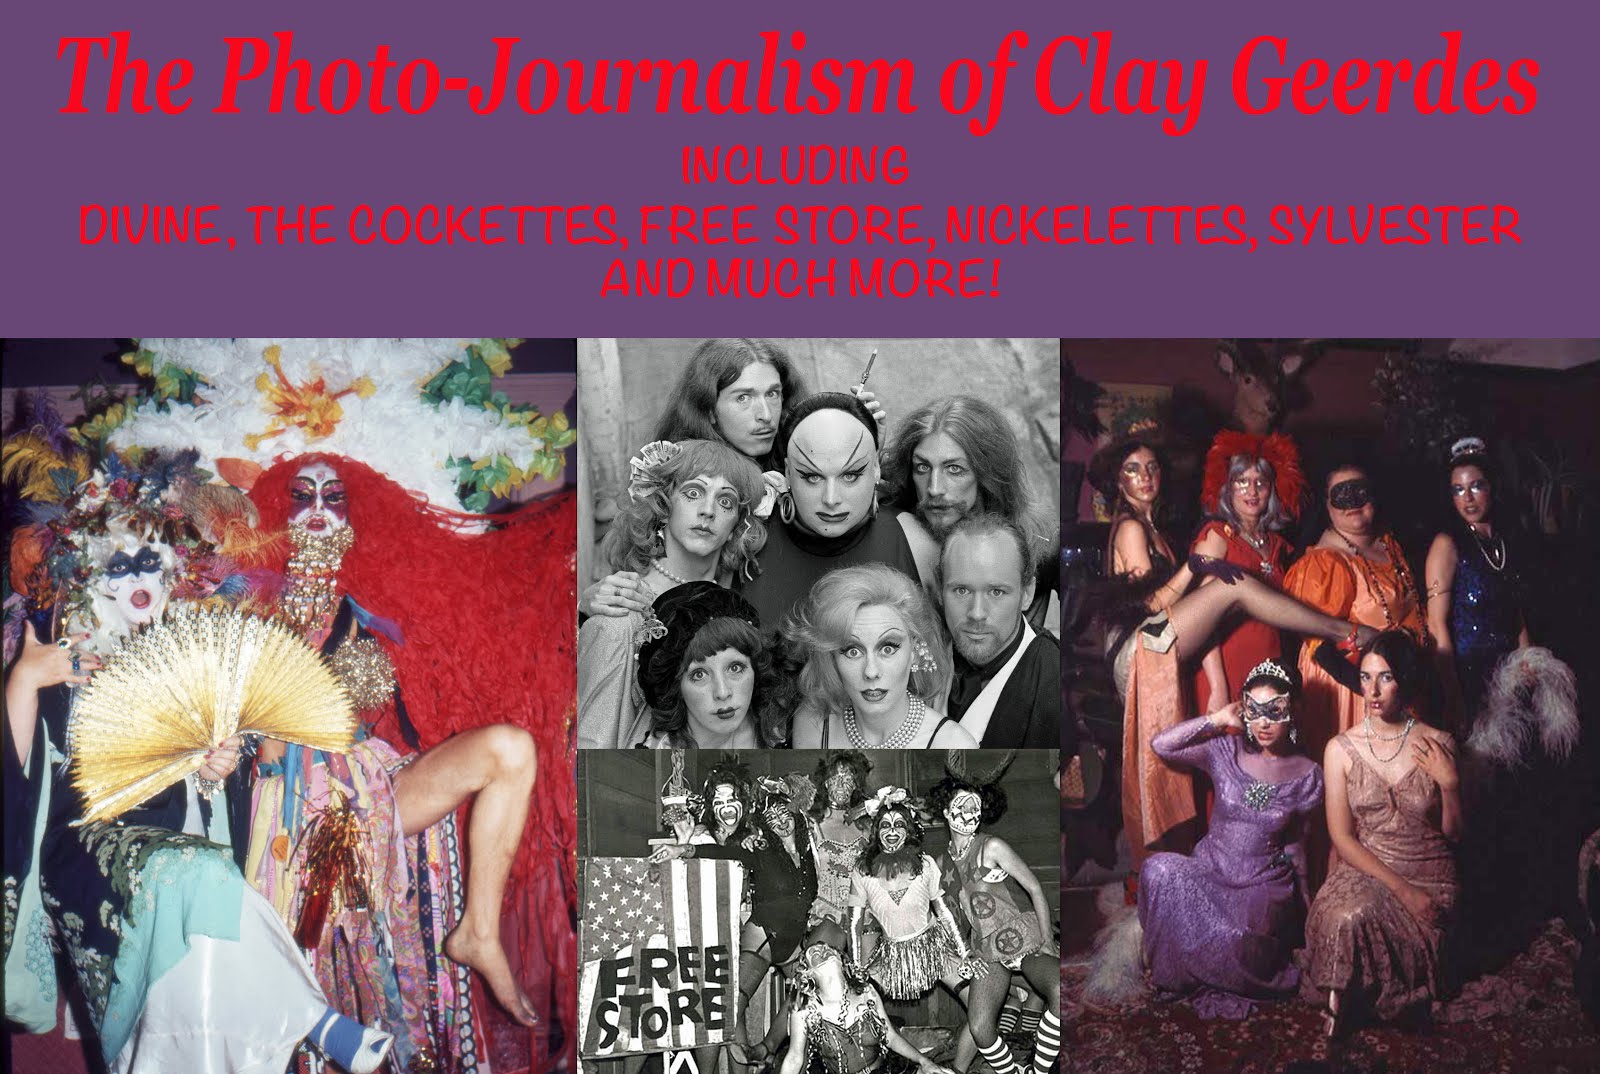 PHOTO-JOURNALS OF CLAY GEERDES